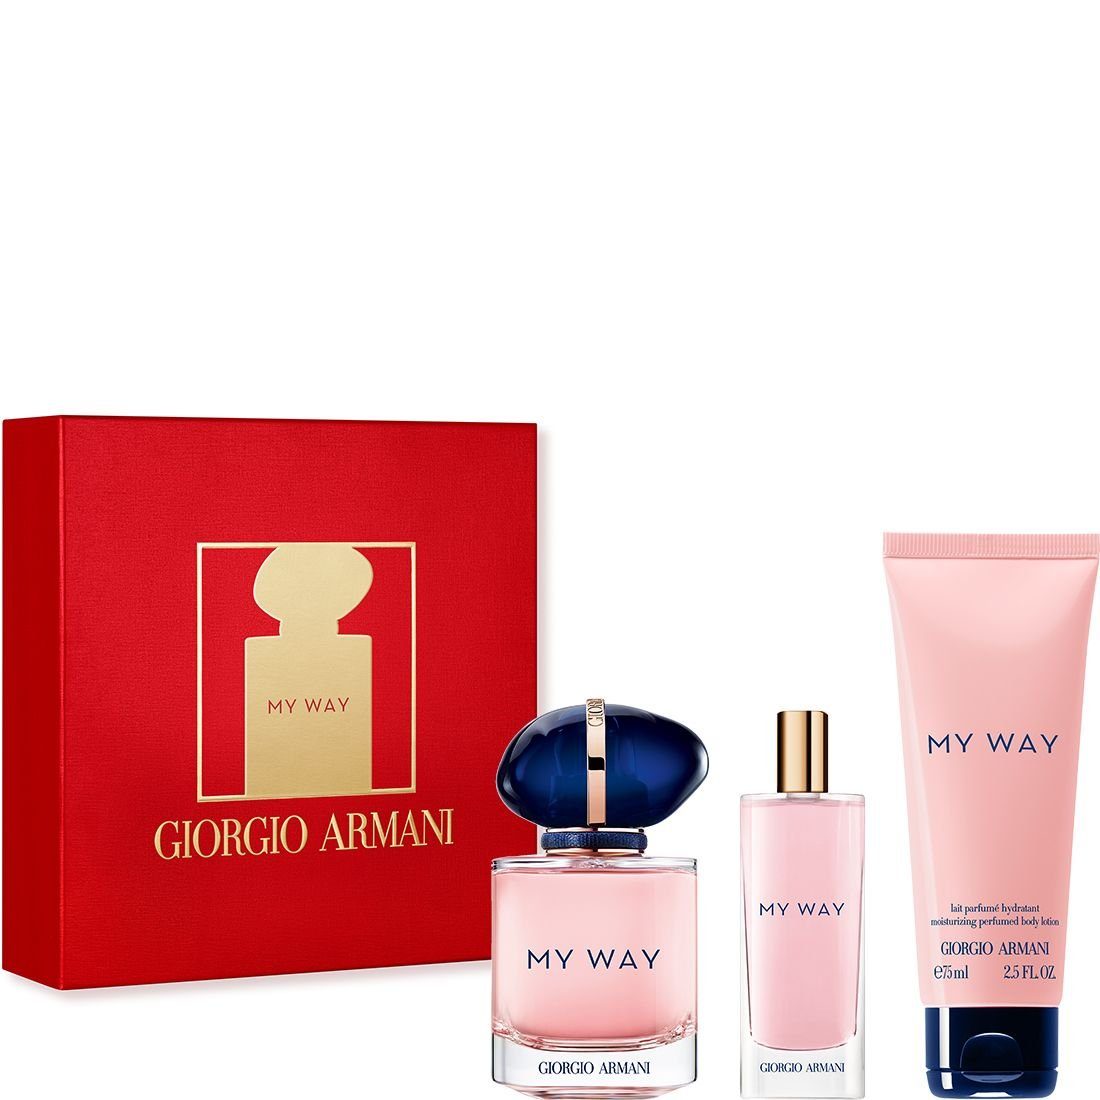 Giorgio Armani Duft-Set Giorgio Armani My Way SET, 3-tlg., Set mit 50 ml  Eau de Parfum + 15 ml Eau de Parfum +75 ml Body Lotion